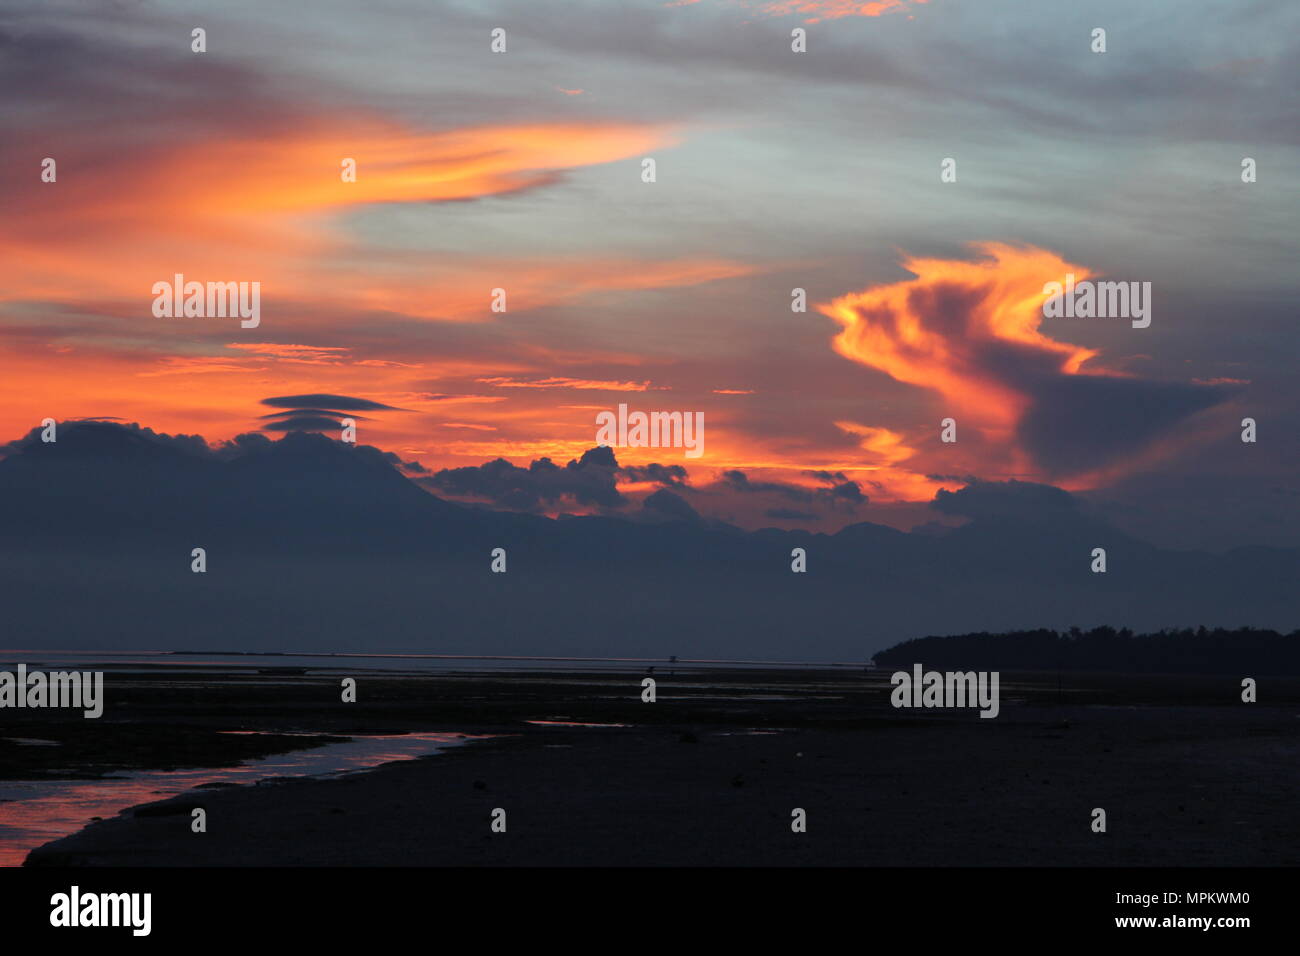 Island sunset on Siquijor island, Philippines Stock Photo